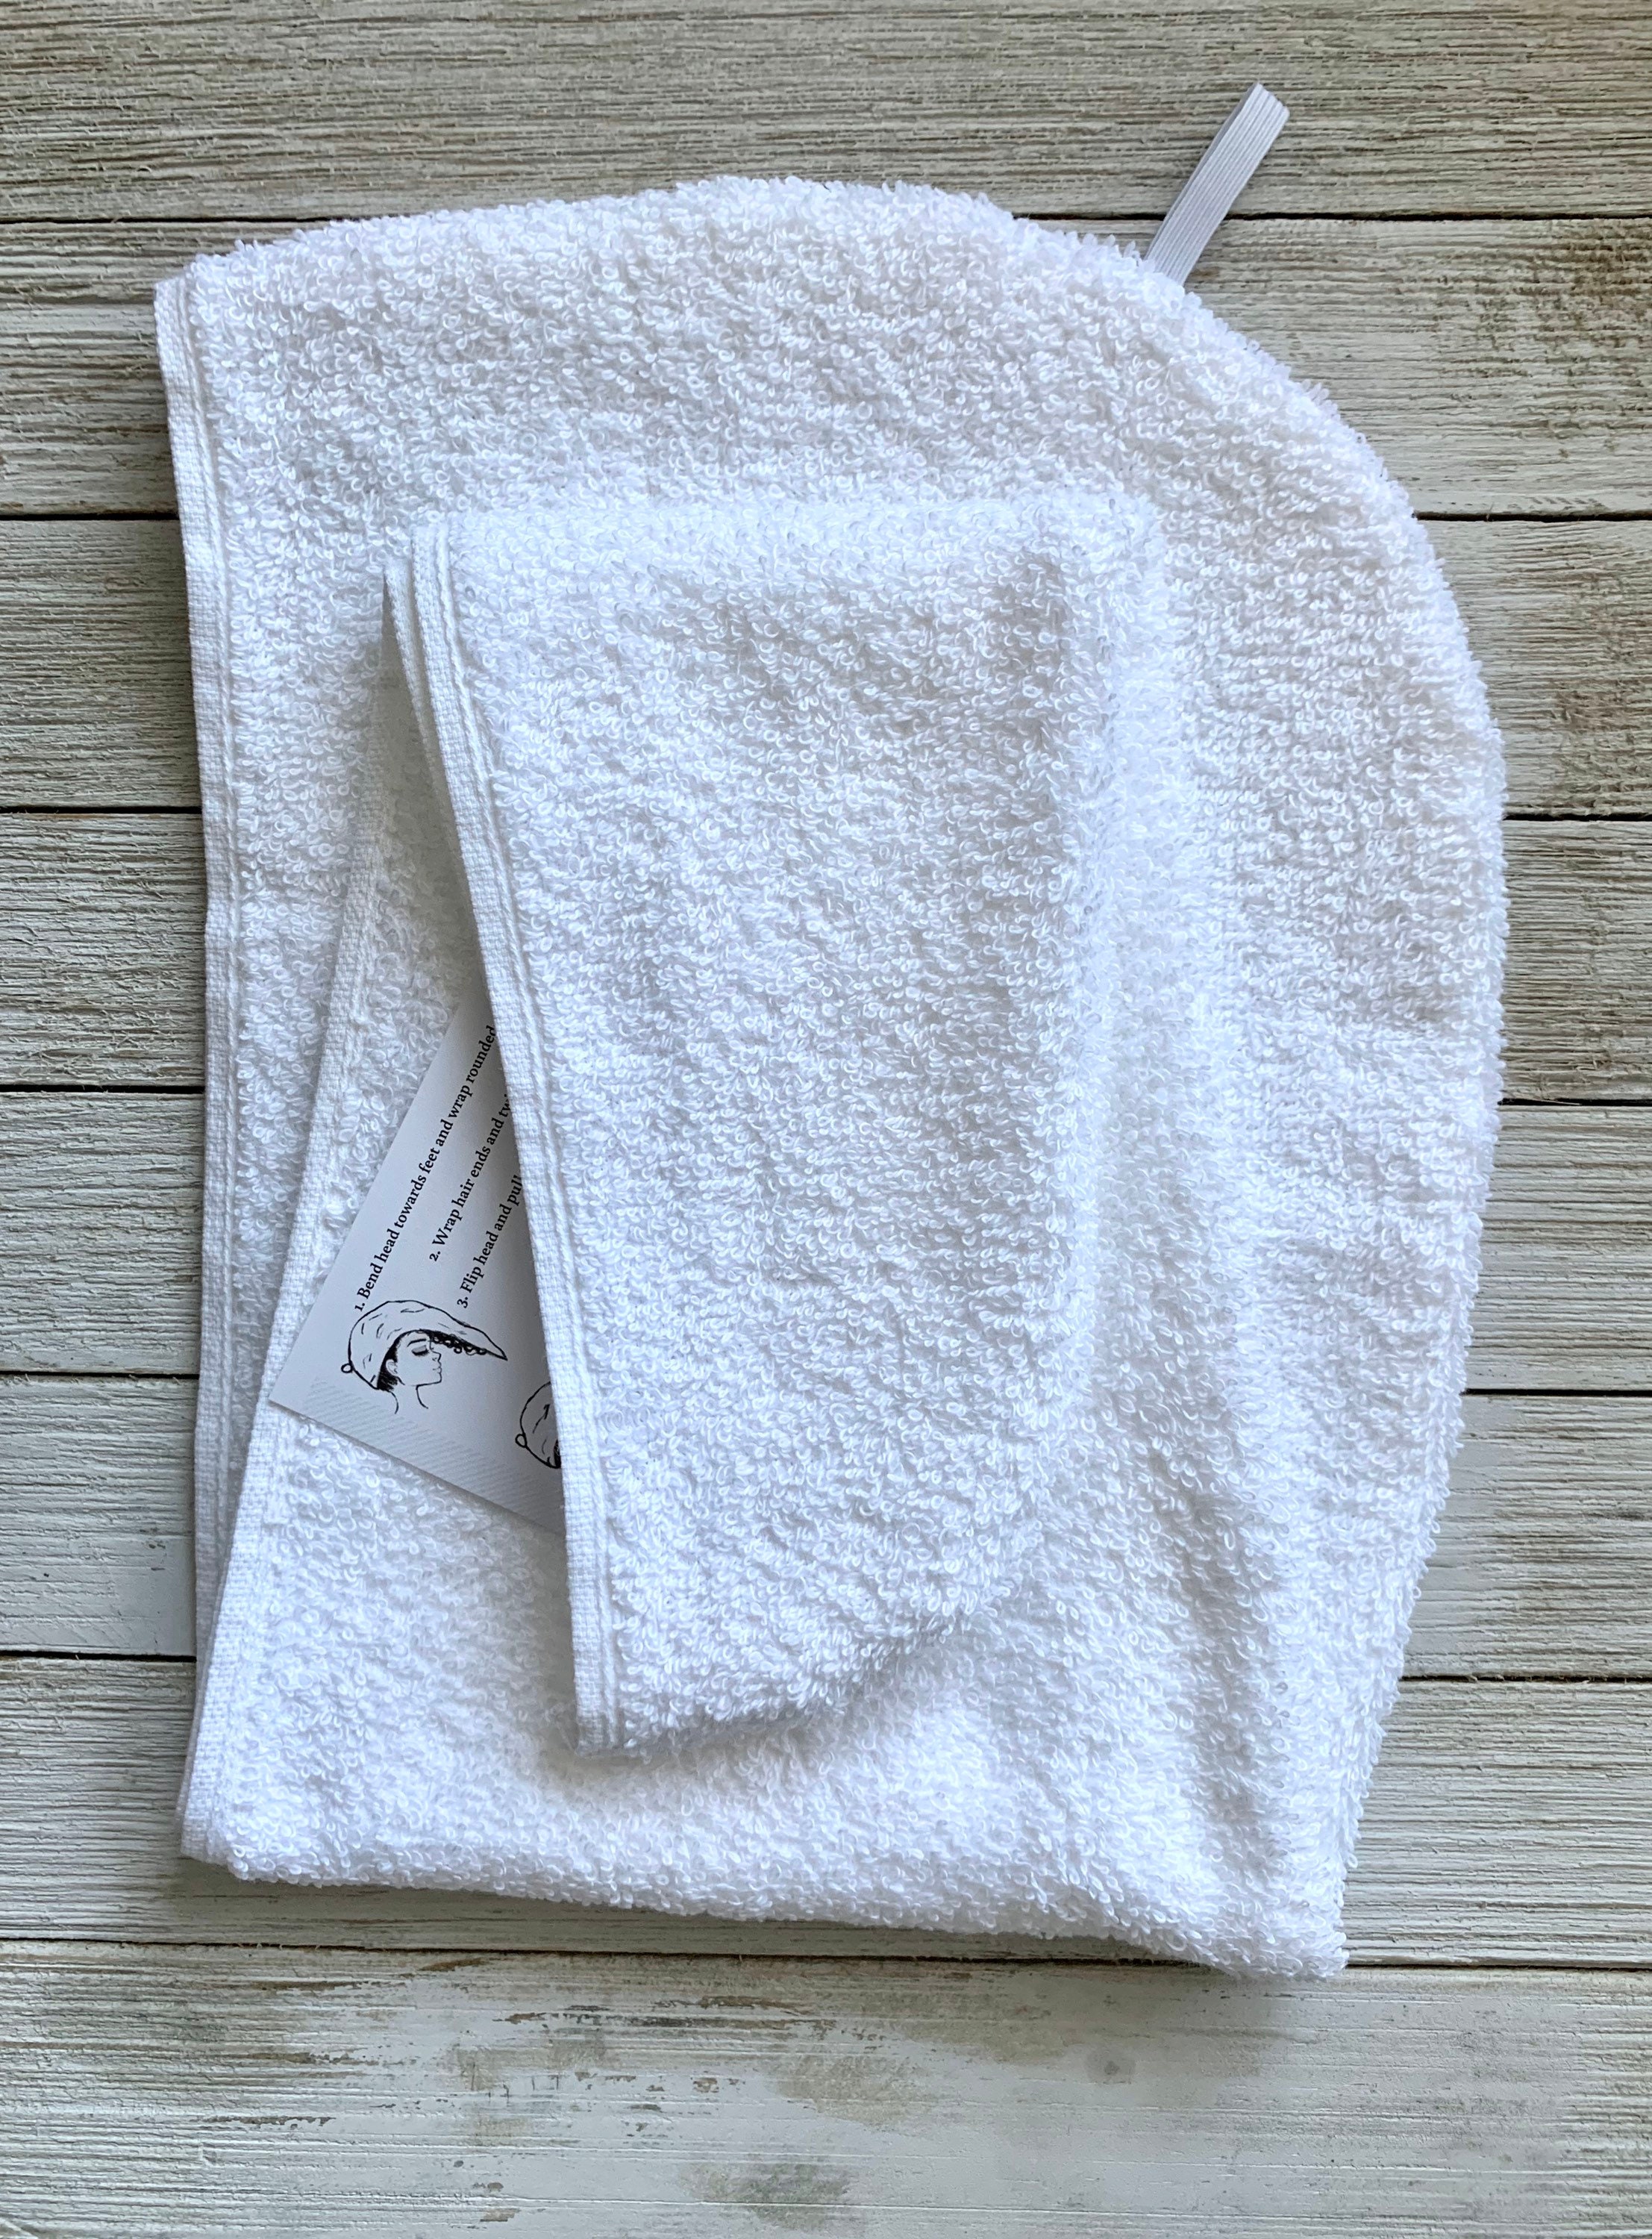 Towel Wrap Towels :: Terry Wraps :: 100% Turkish Cotton White